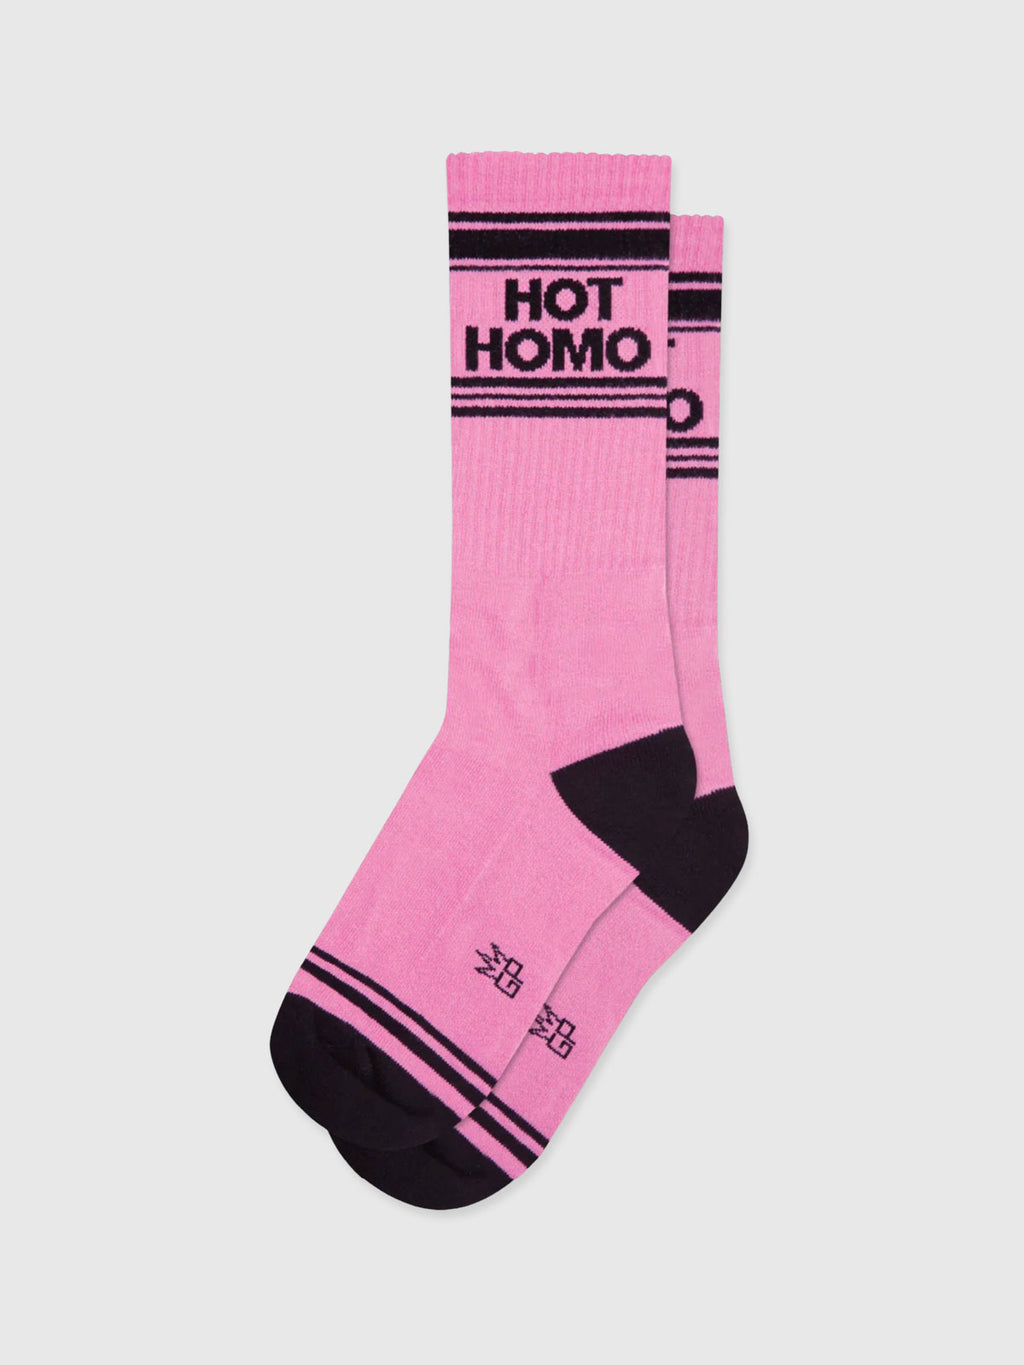 Gumball Poodle - Hot Homo Socks